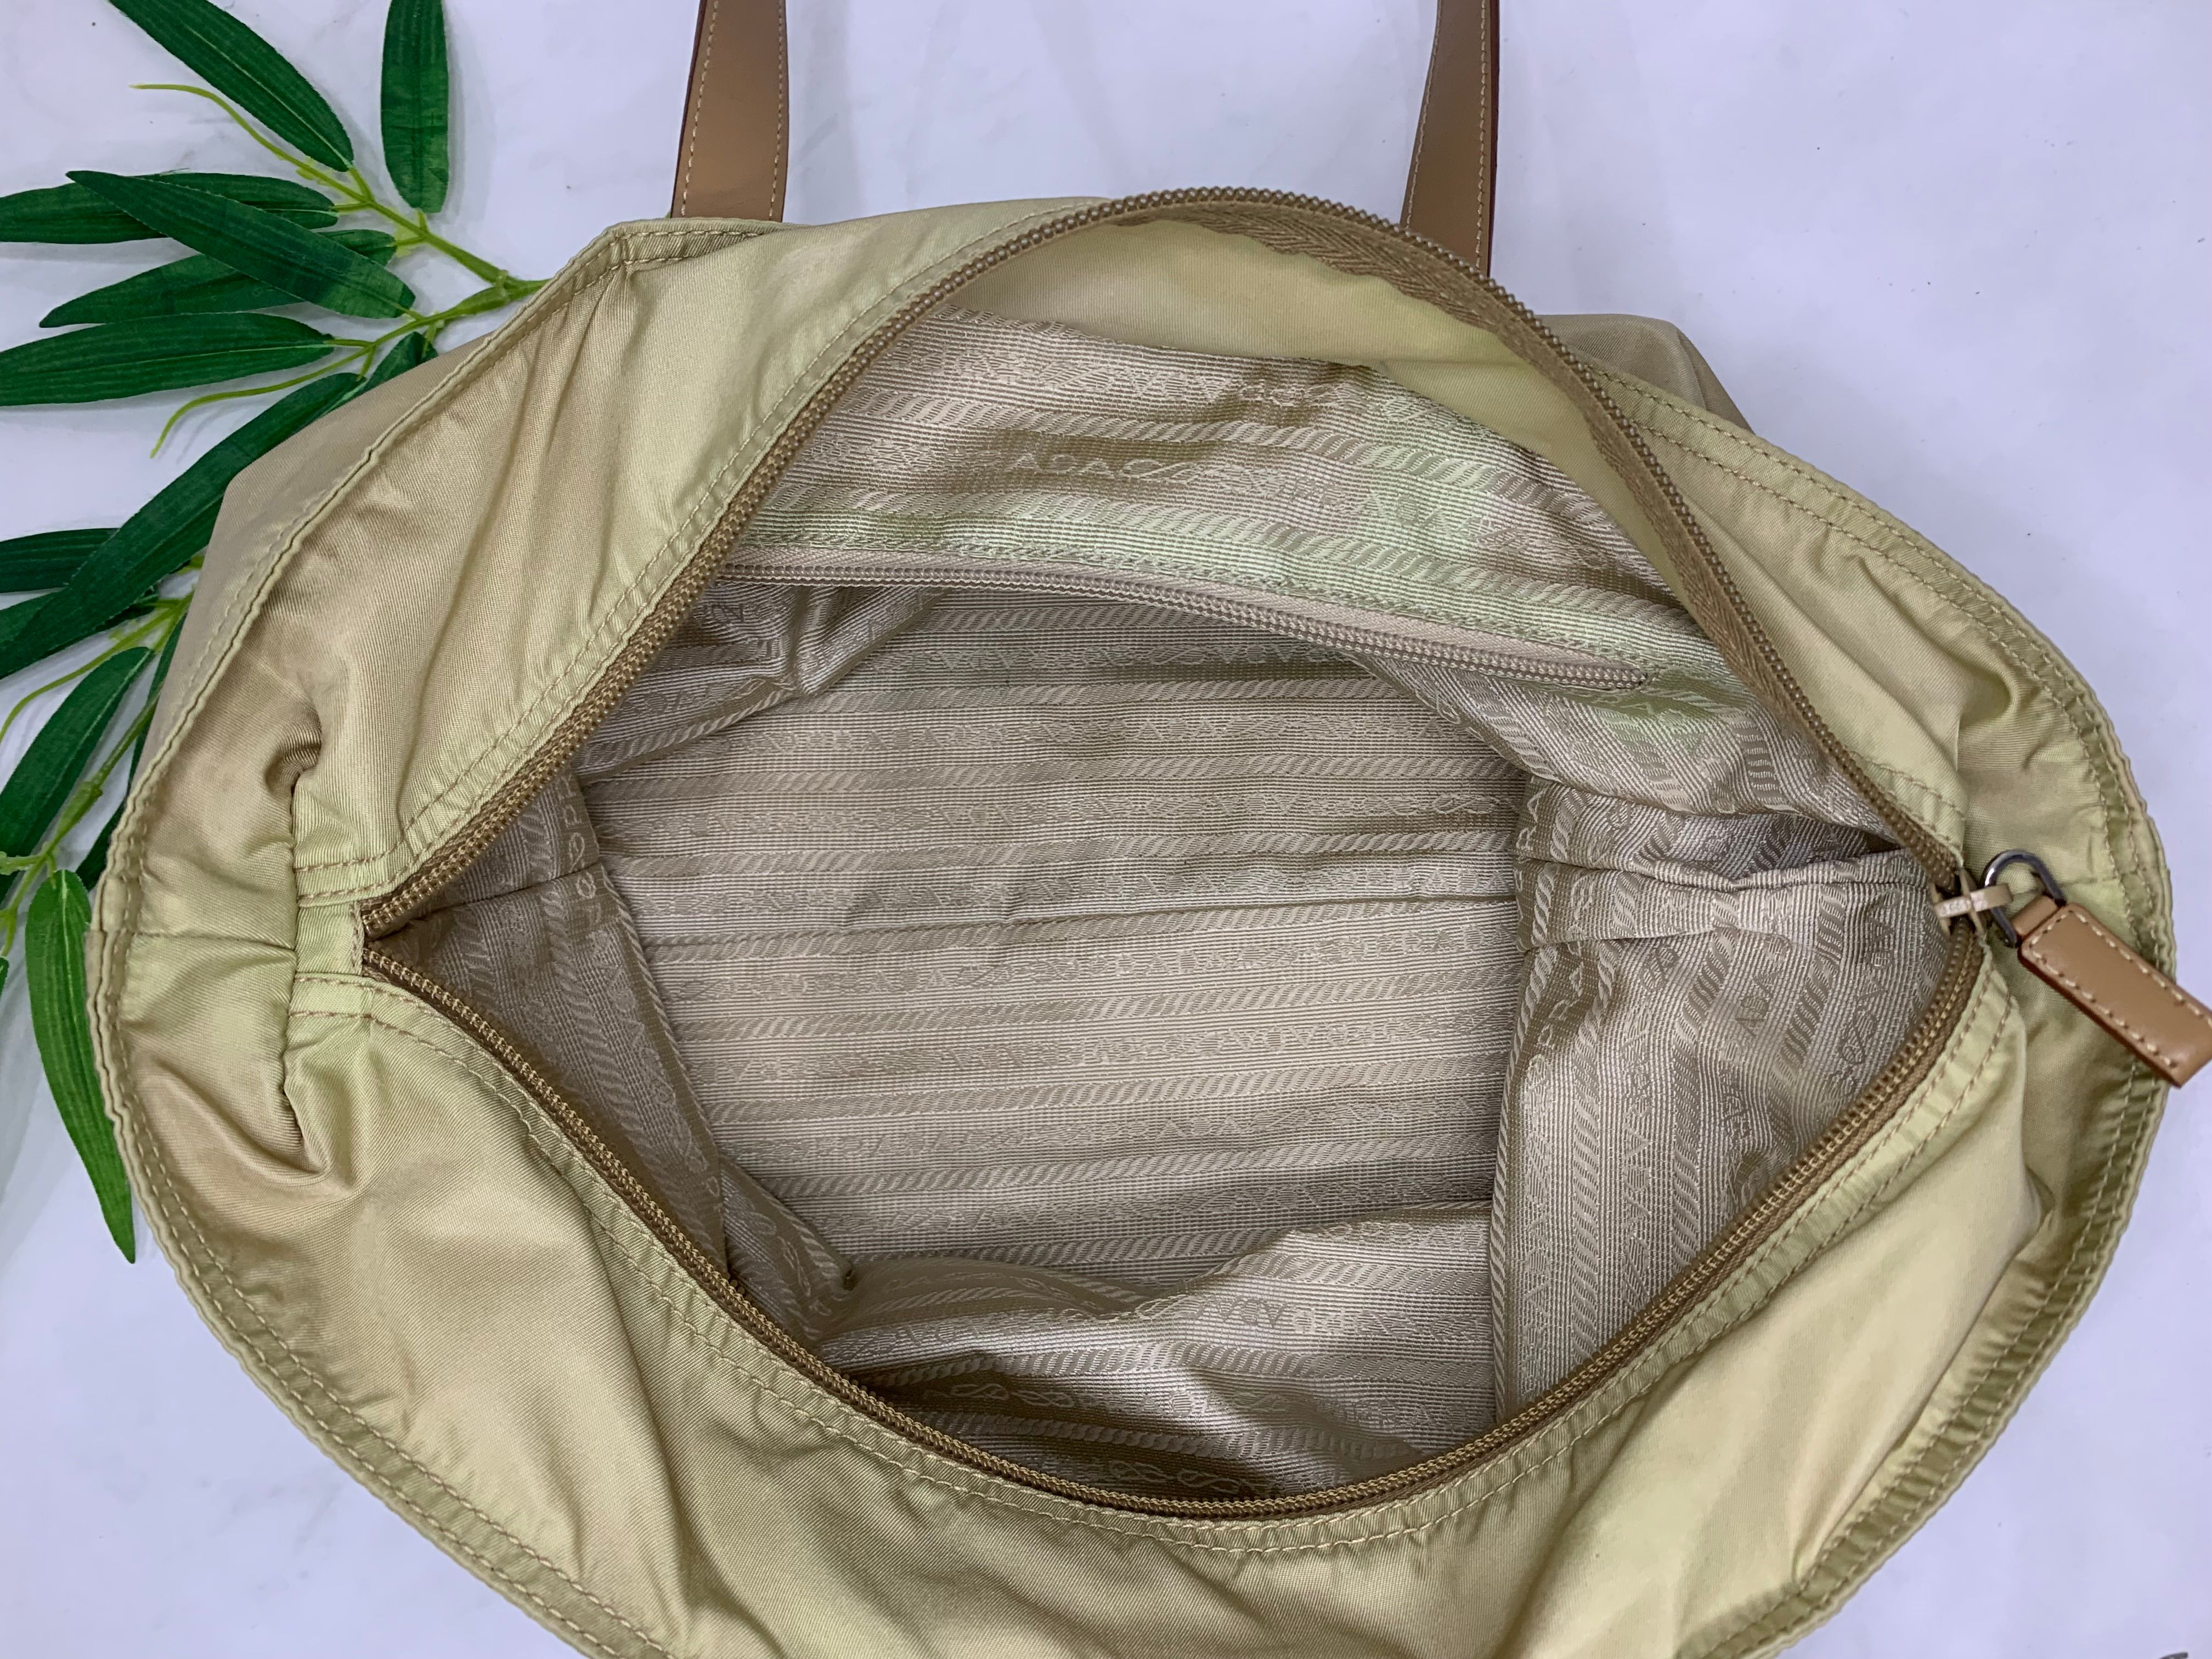 Authentic prada nylon shoulder bag - 8